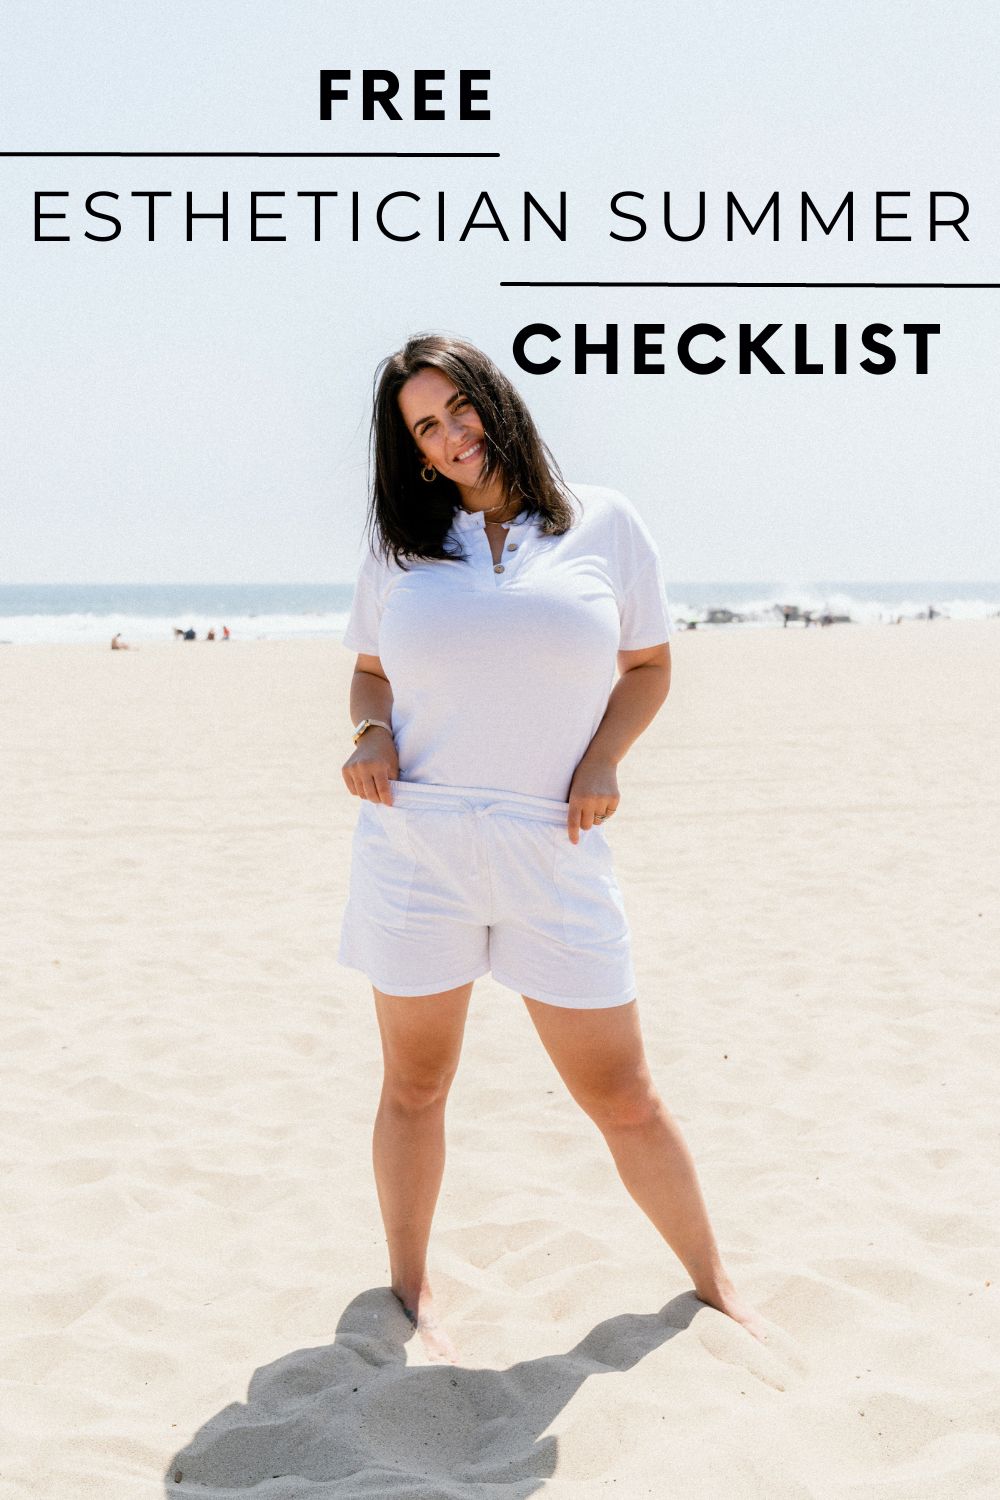 FREE Esthetician Summer Checklist